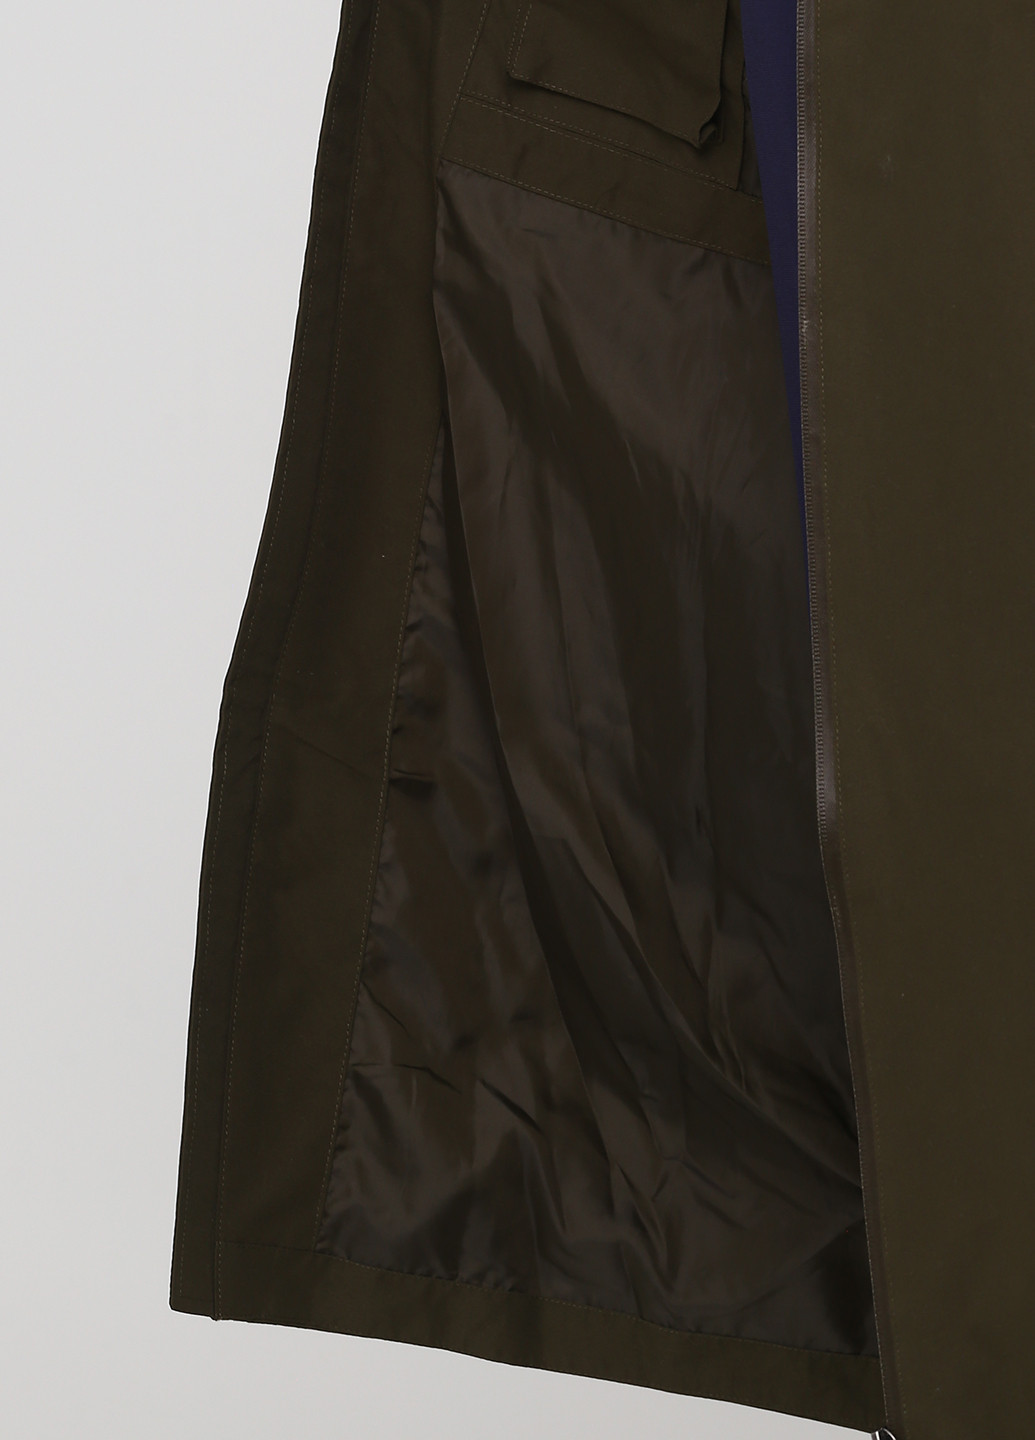 Оливковая (хаки) демисезонная куртка Crivit